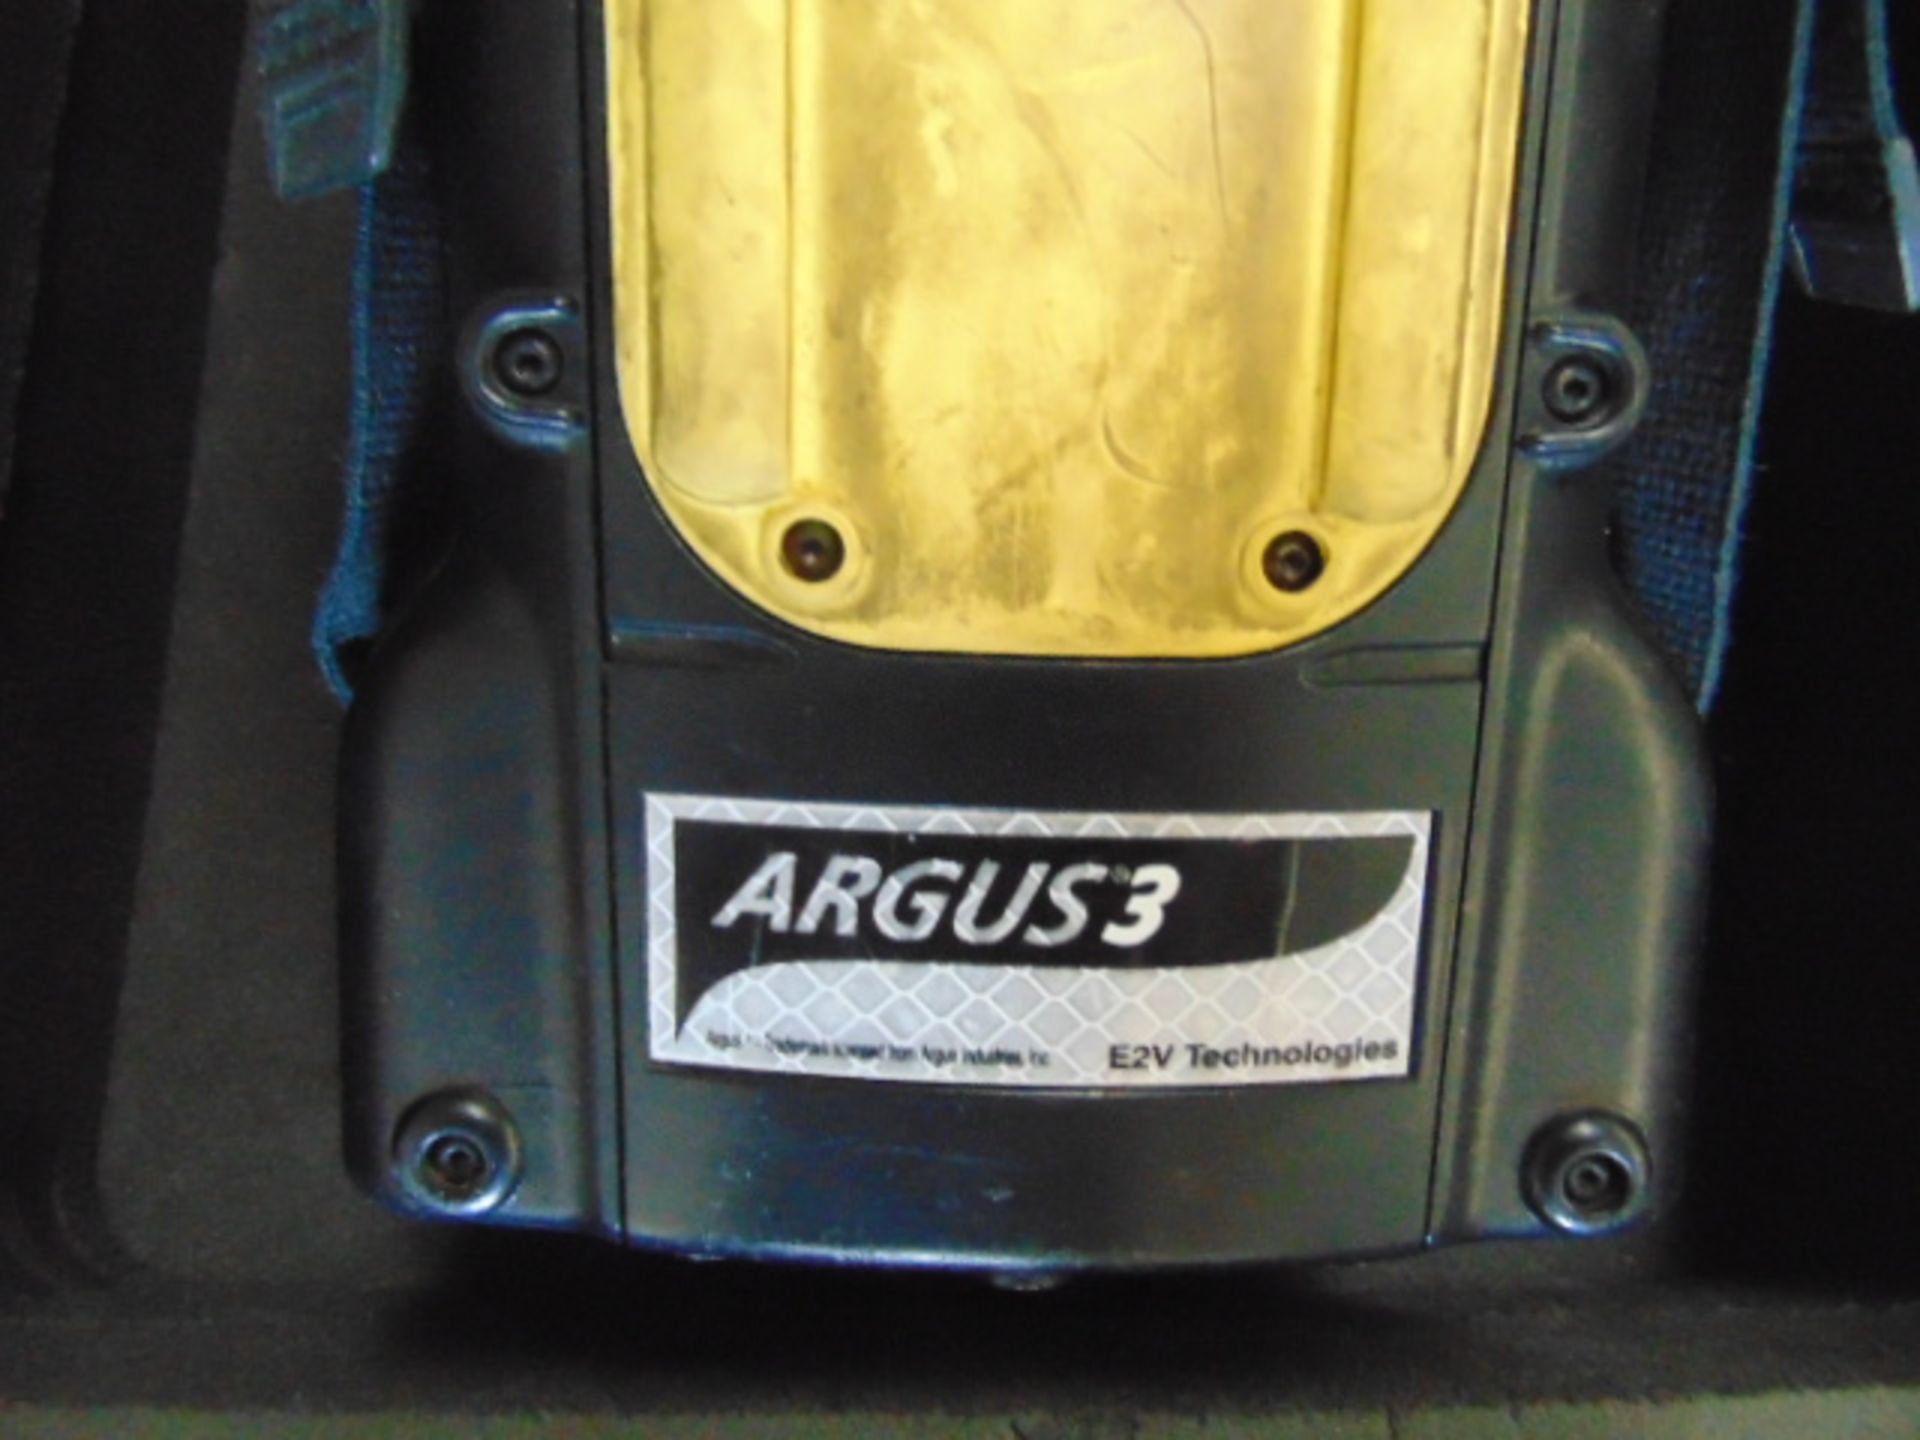 E2V Argus 3 Smoke Vision System / Thermal Imaging Camera - Image 4 of 12